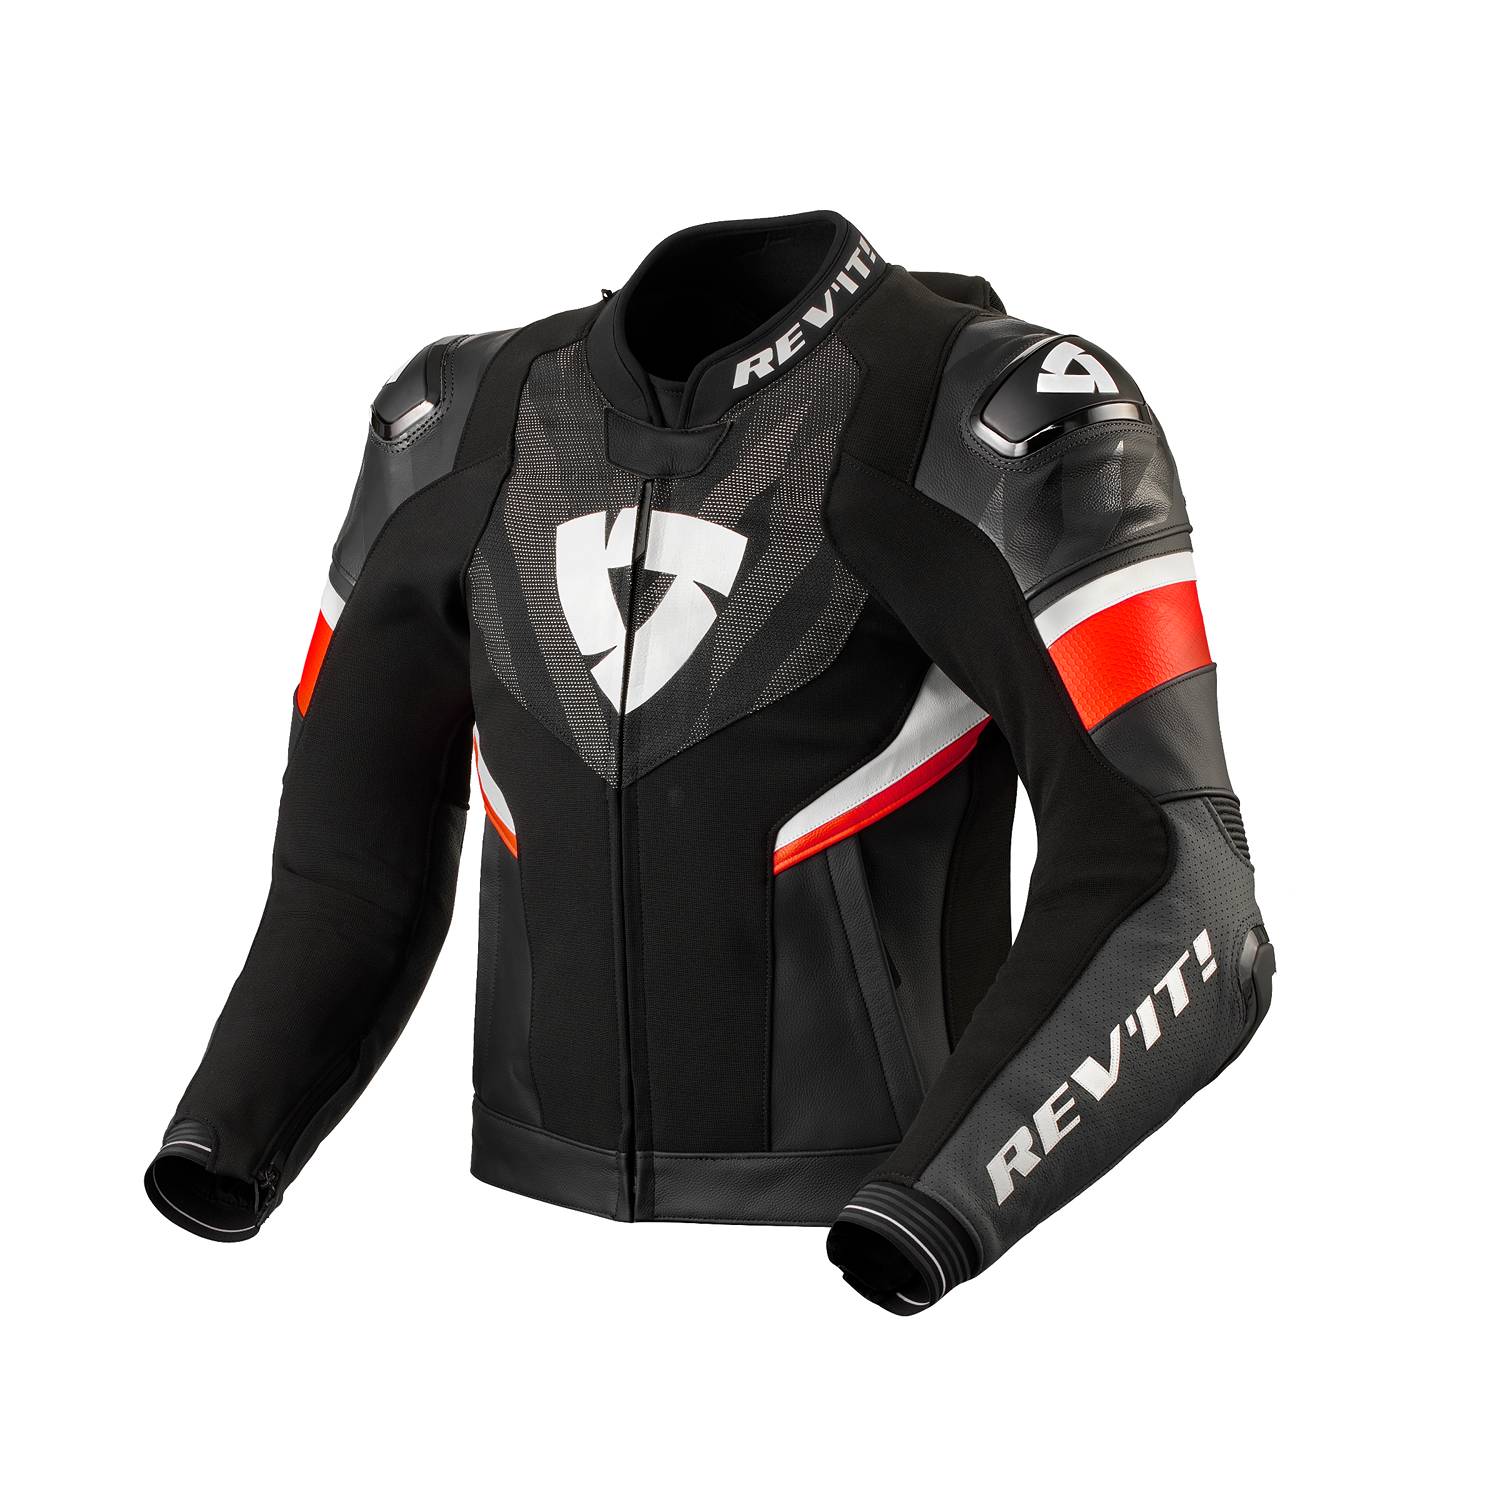 Image of REV'IT! Hyperspeed 2 Pro Jacket Black Neon Red Size 54 EN